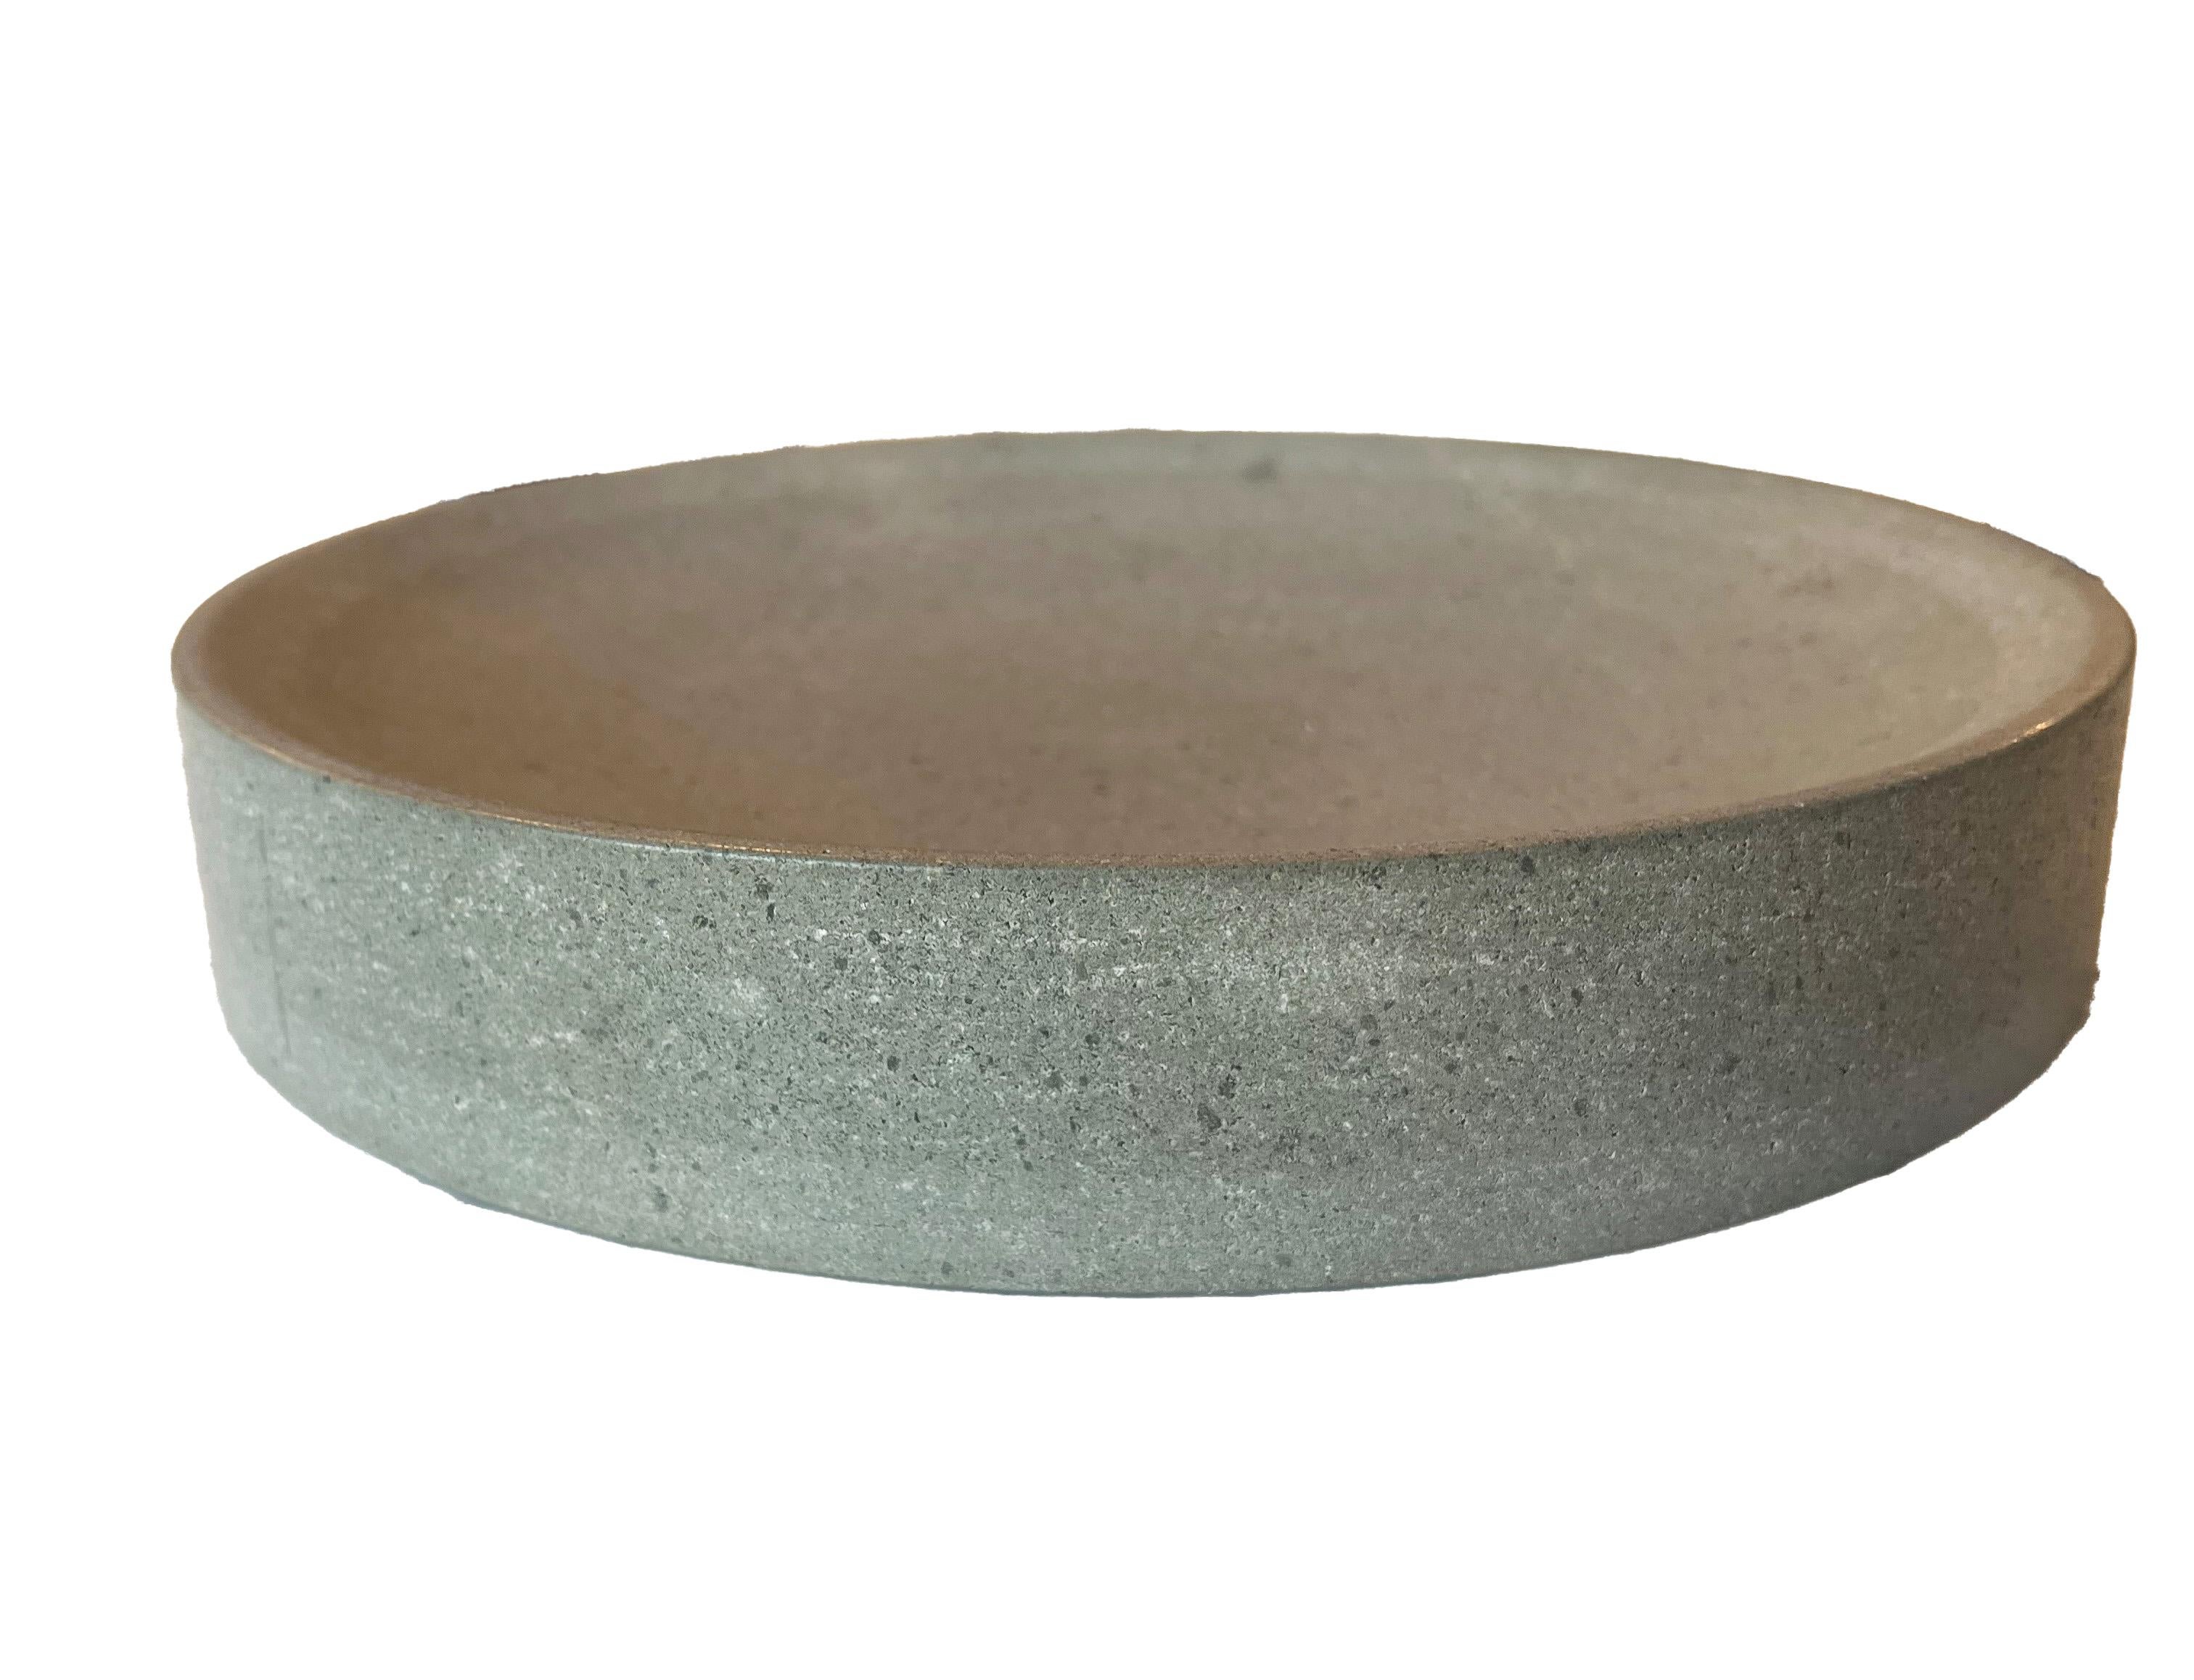 Indonesian Artesian Concrete Bowl For Sale